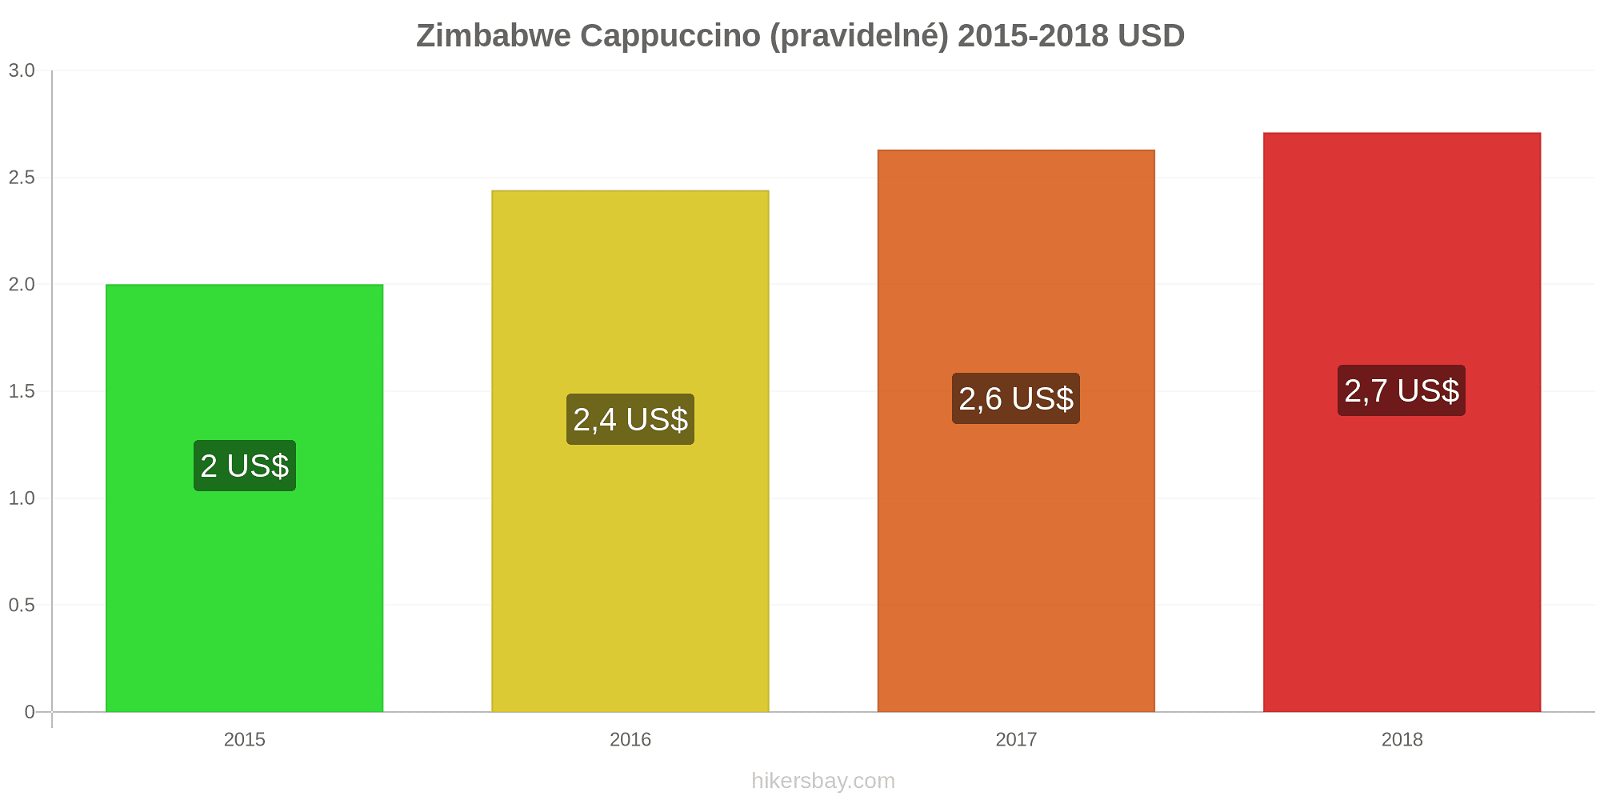 Zimbabwe změny cen Cappuccino hikersbay.com